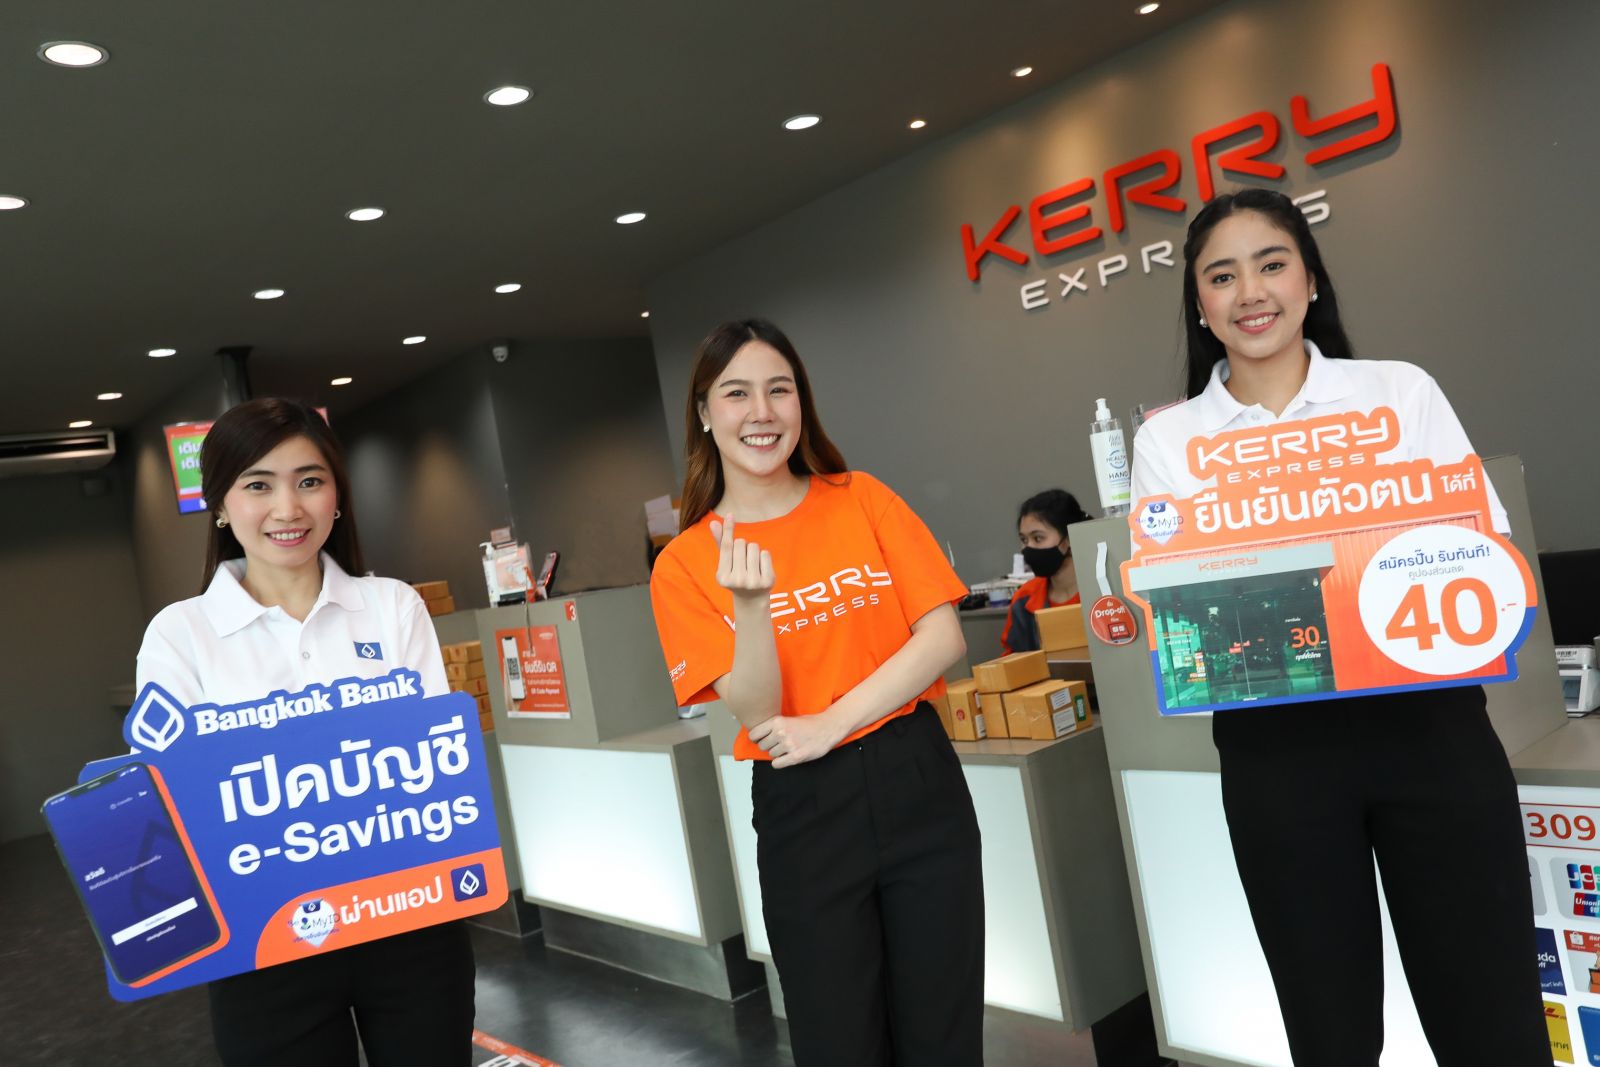 Bangkok Bank Joins Kerry Express to Extend Mobile Banking App